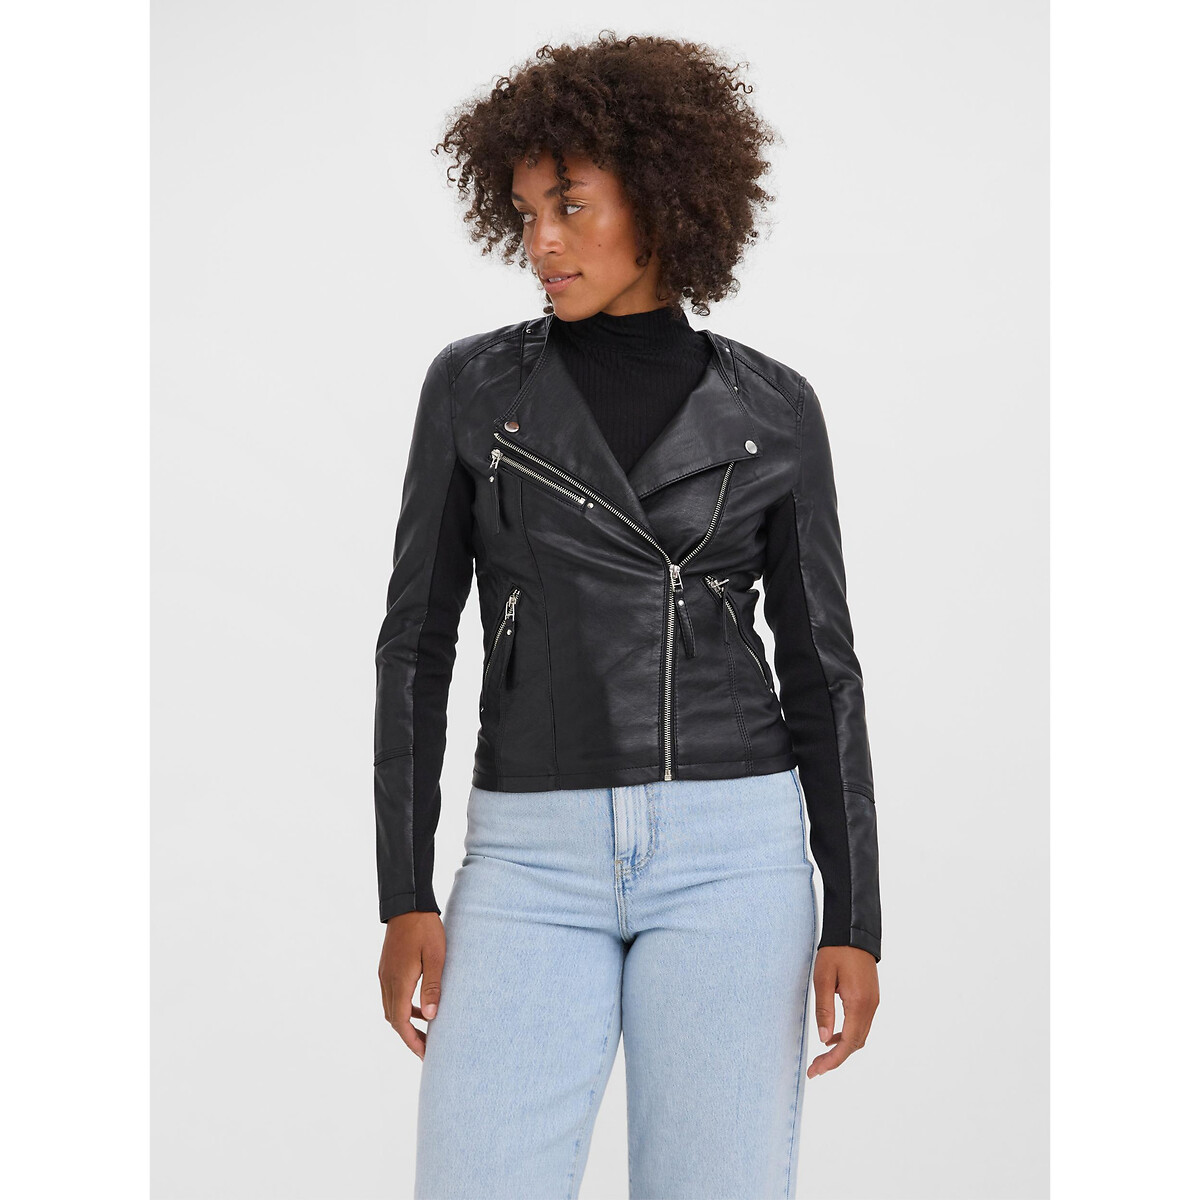 Faux jacket, black, Vero Moda | La Redoute